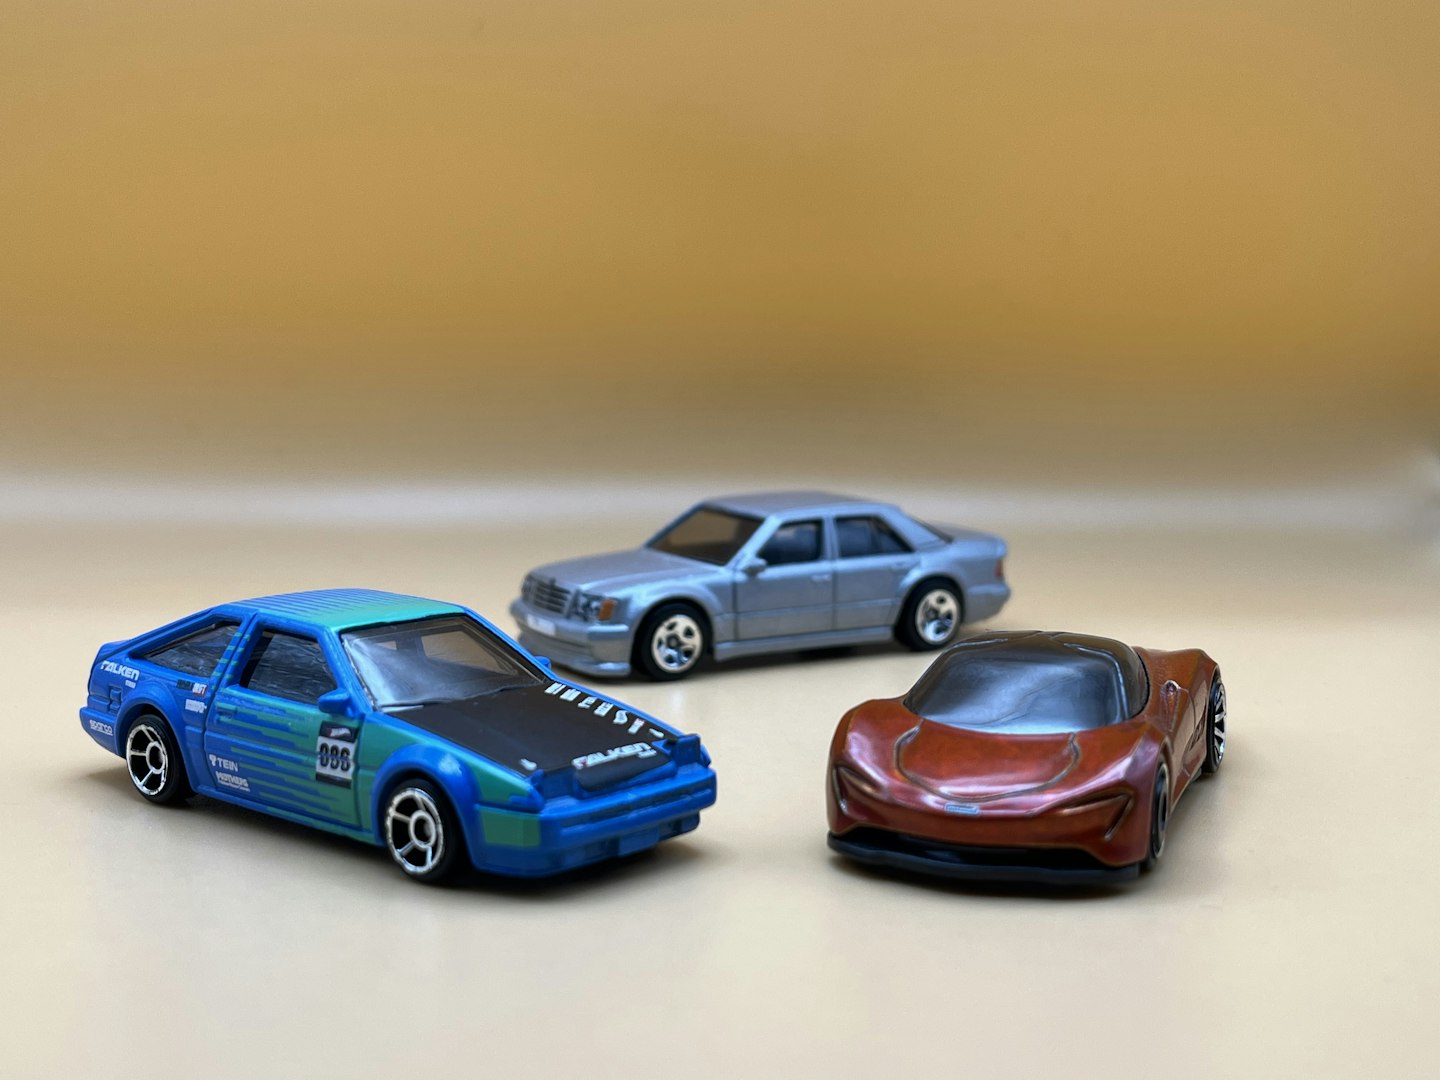 The mainline Hot Wheels models